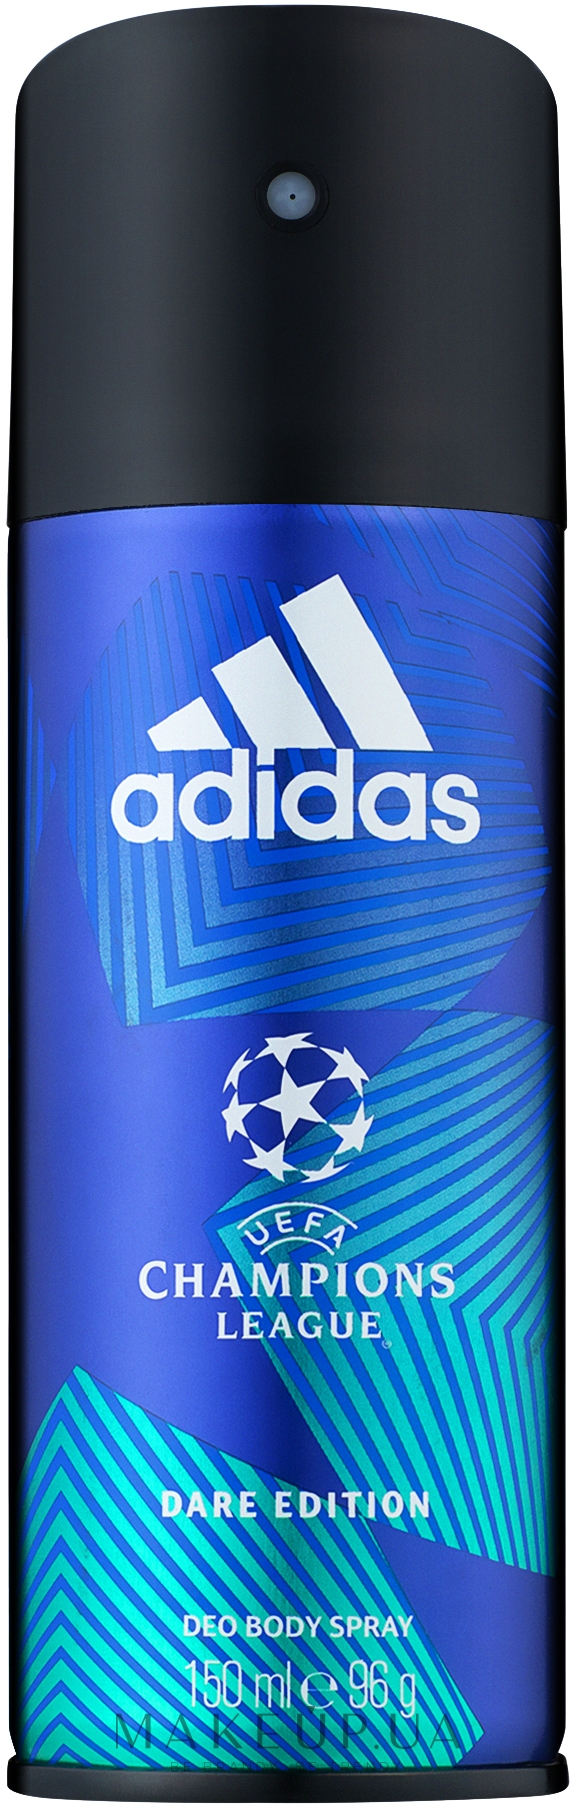 adidas champions edition deo body spray